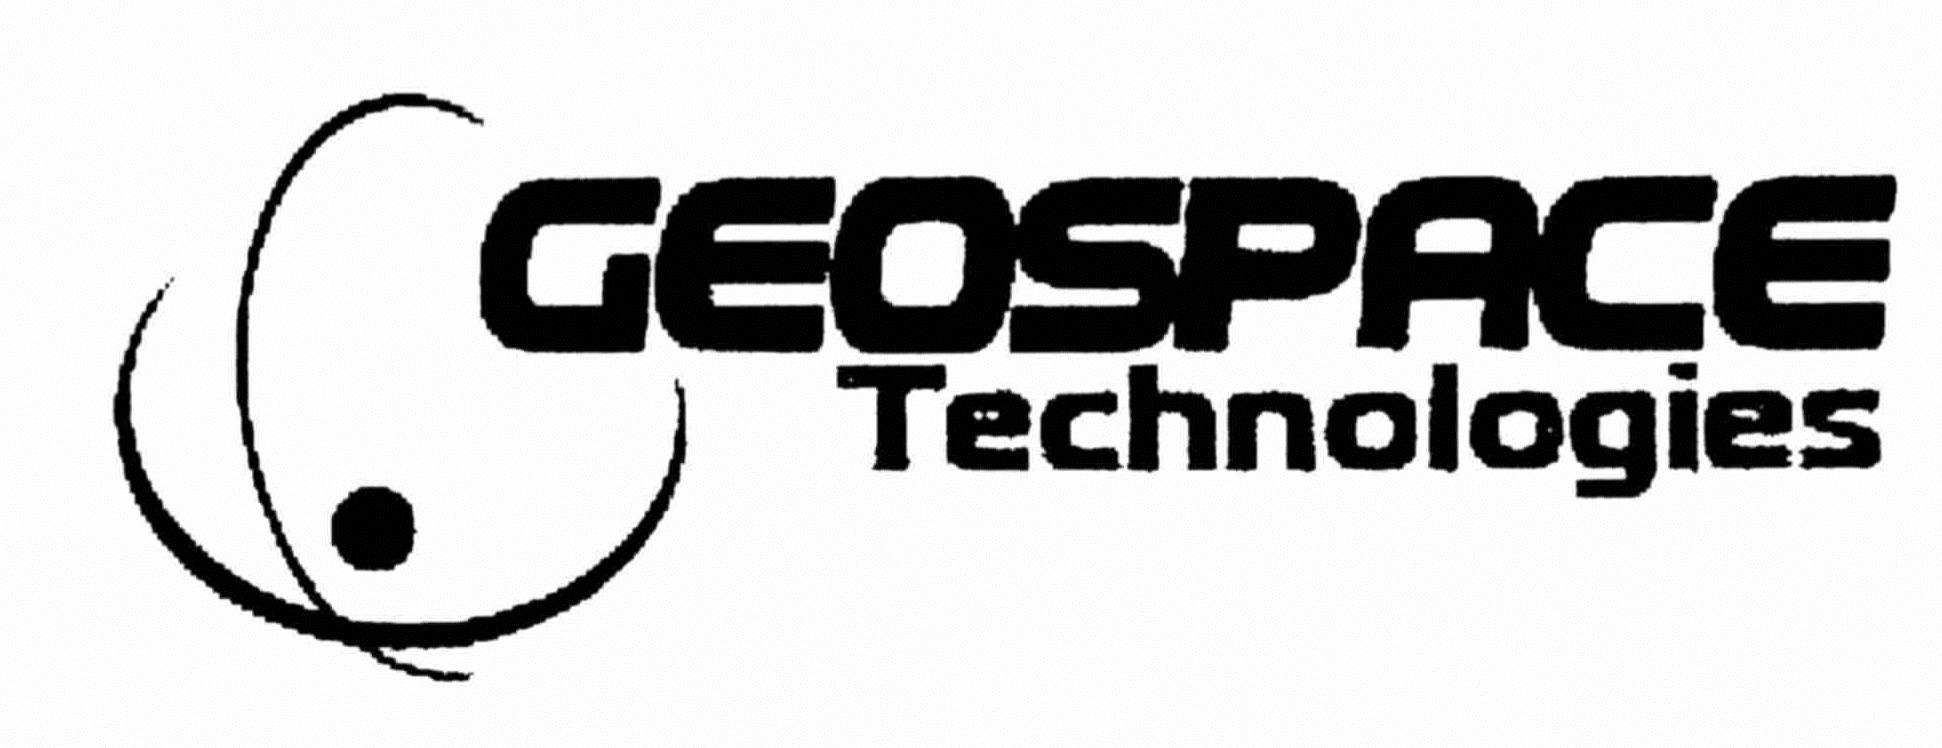 Trademark Logo GEOSPACE TECHNOLOGIES